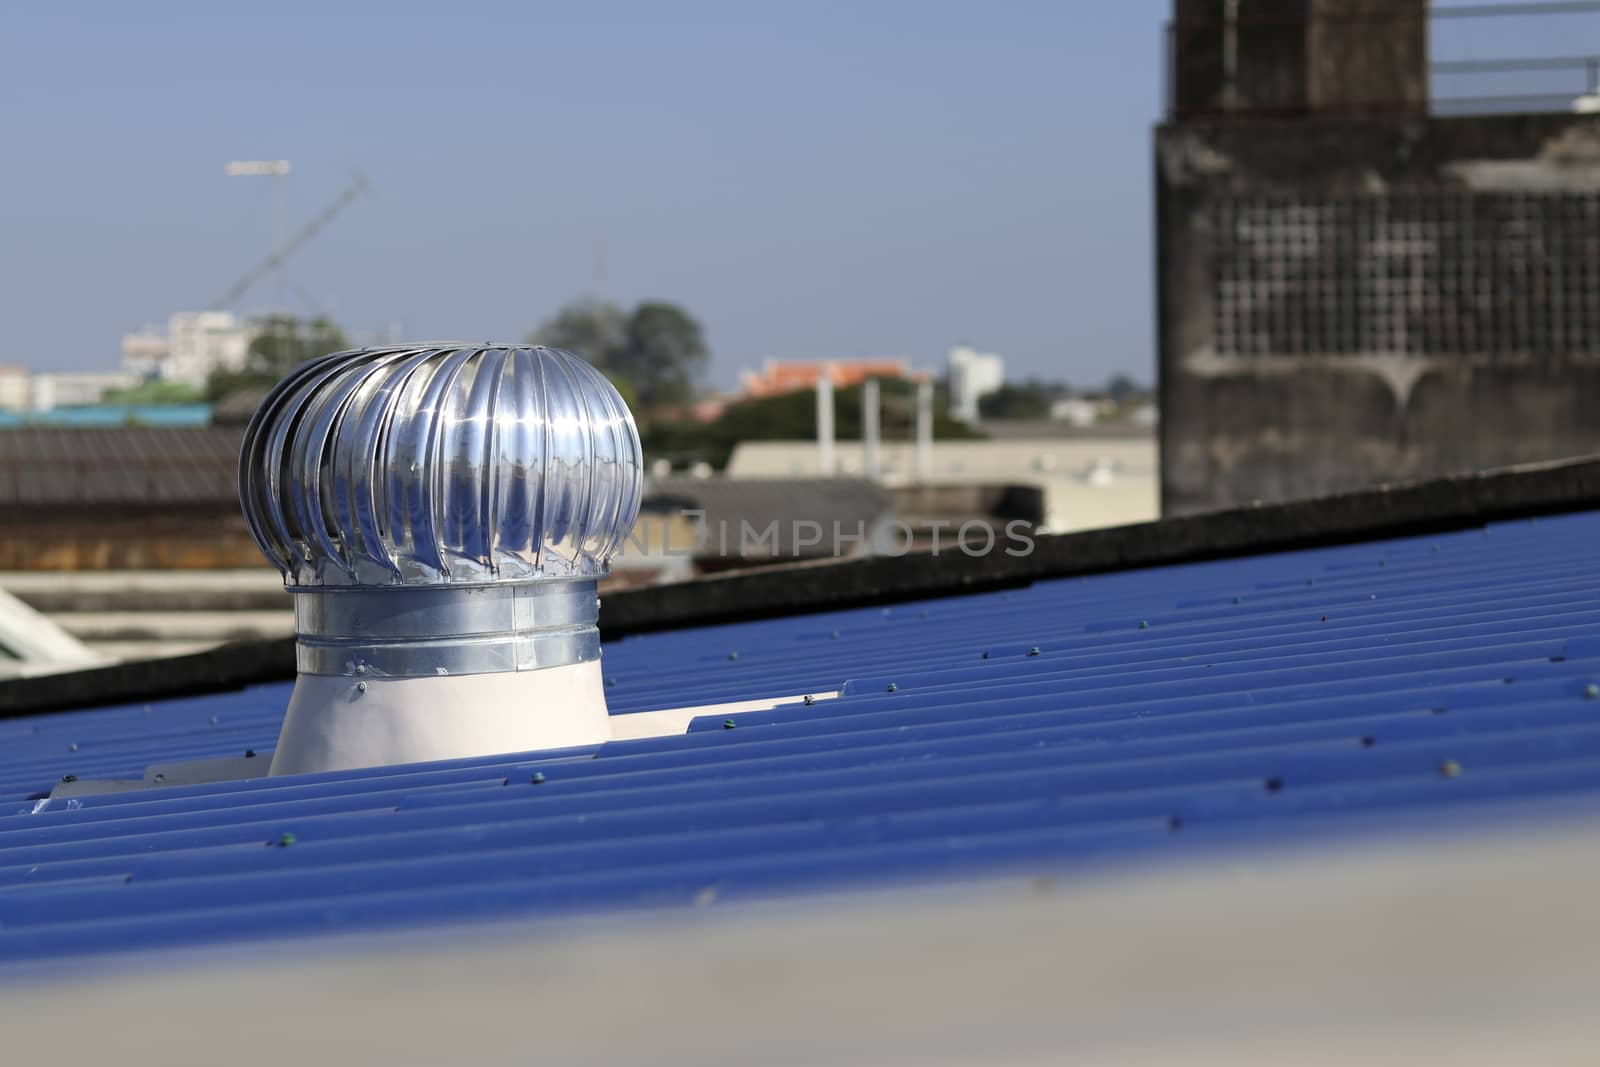 Turbine ventilator installed on the blue roof. Turbine ventilator helps the air to flow at all times.